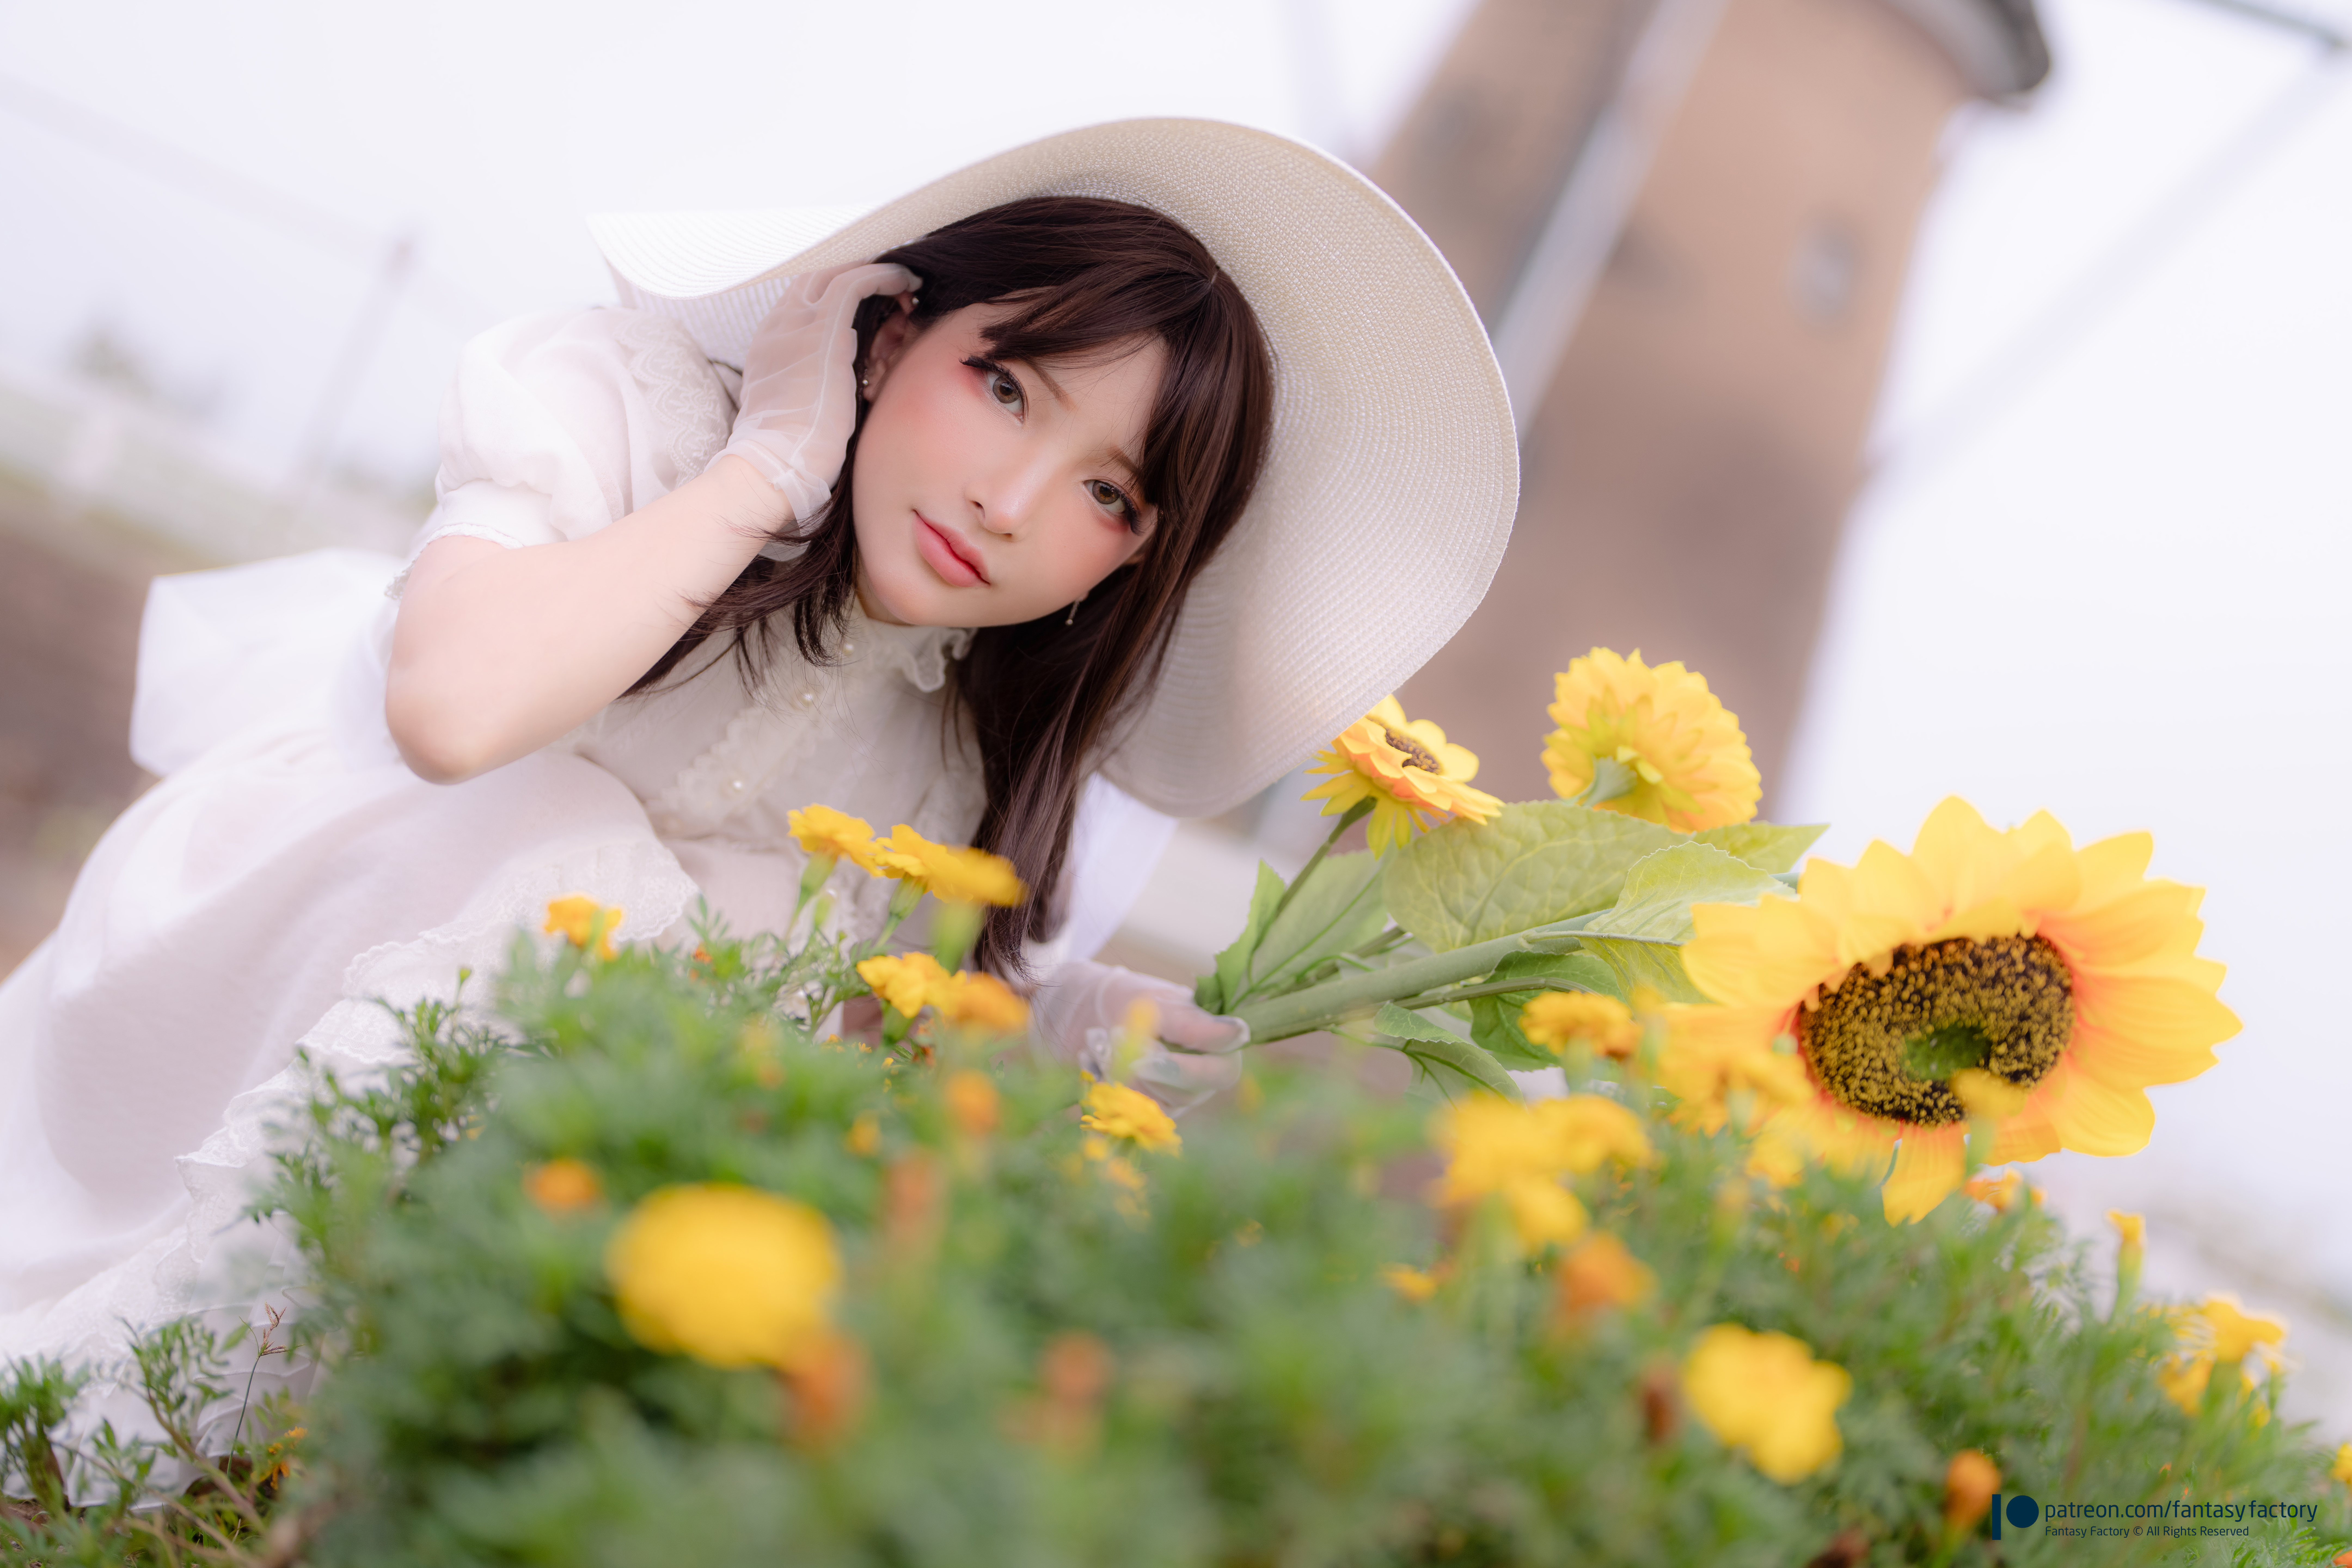 Women Model Asian Women Outdoors Women With Hats Brunette Dress White Clothing Sunflowers 8640x5760